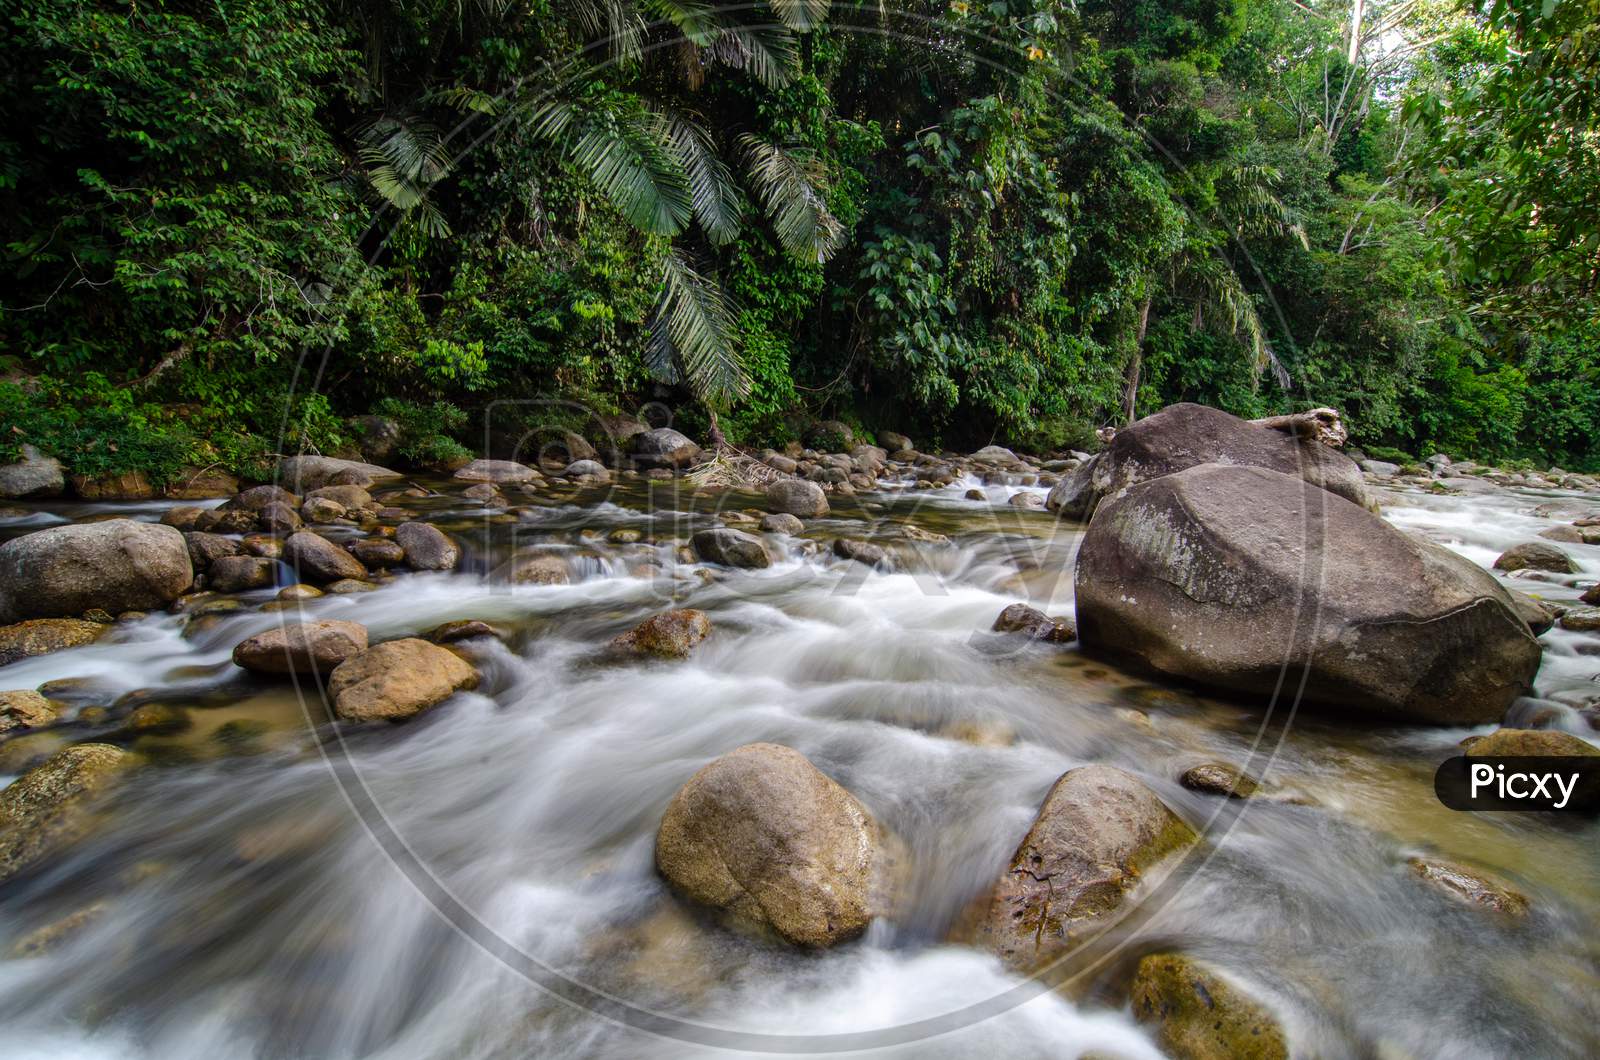 Slow Motion Water Flow In The River At Sungai Sedim, Kedah.